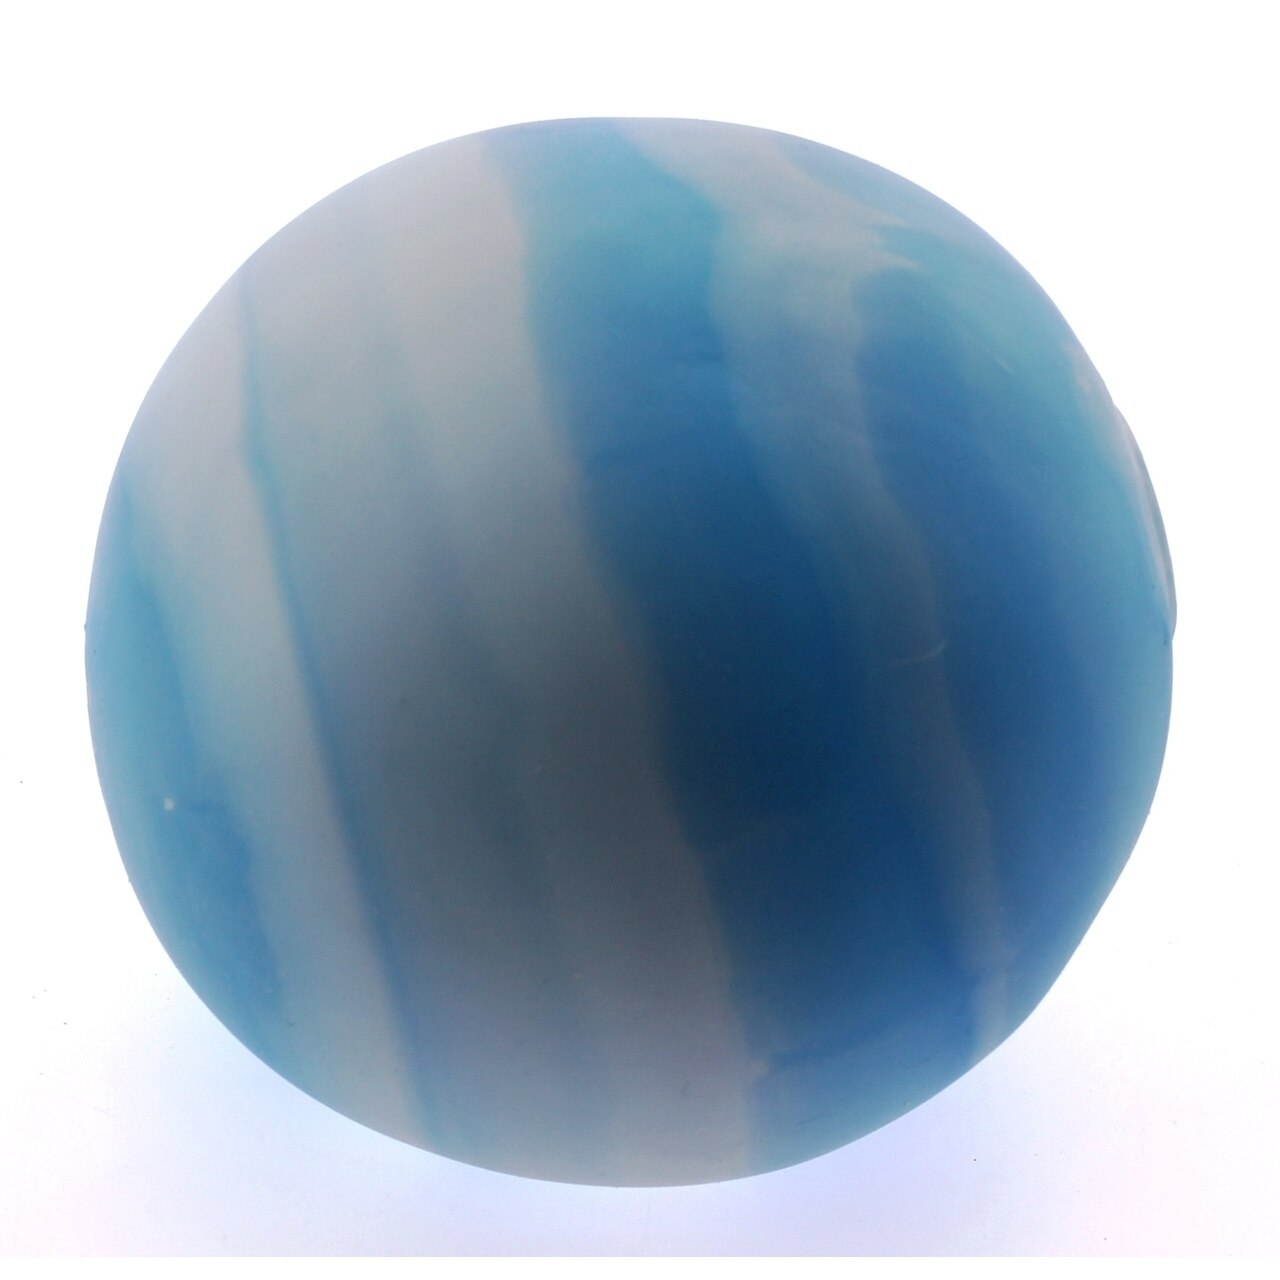 Squishy Stress Ball Blue Slime